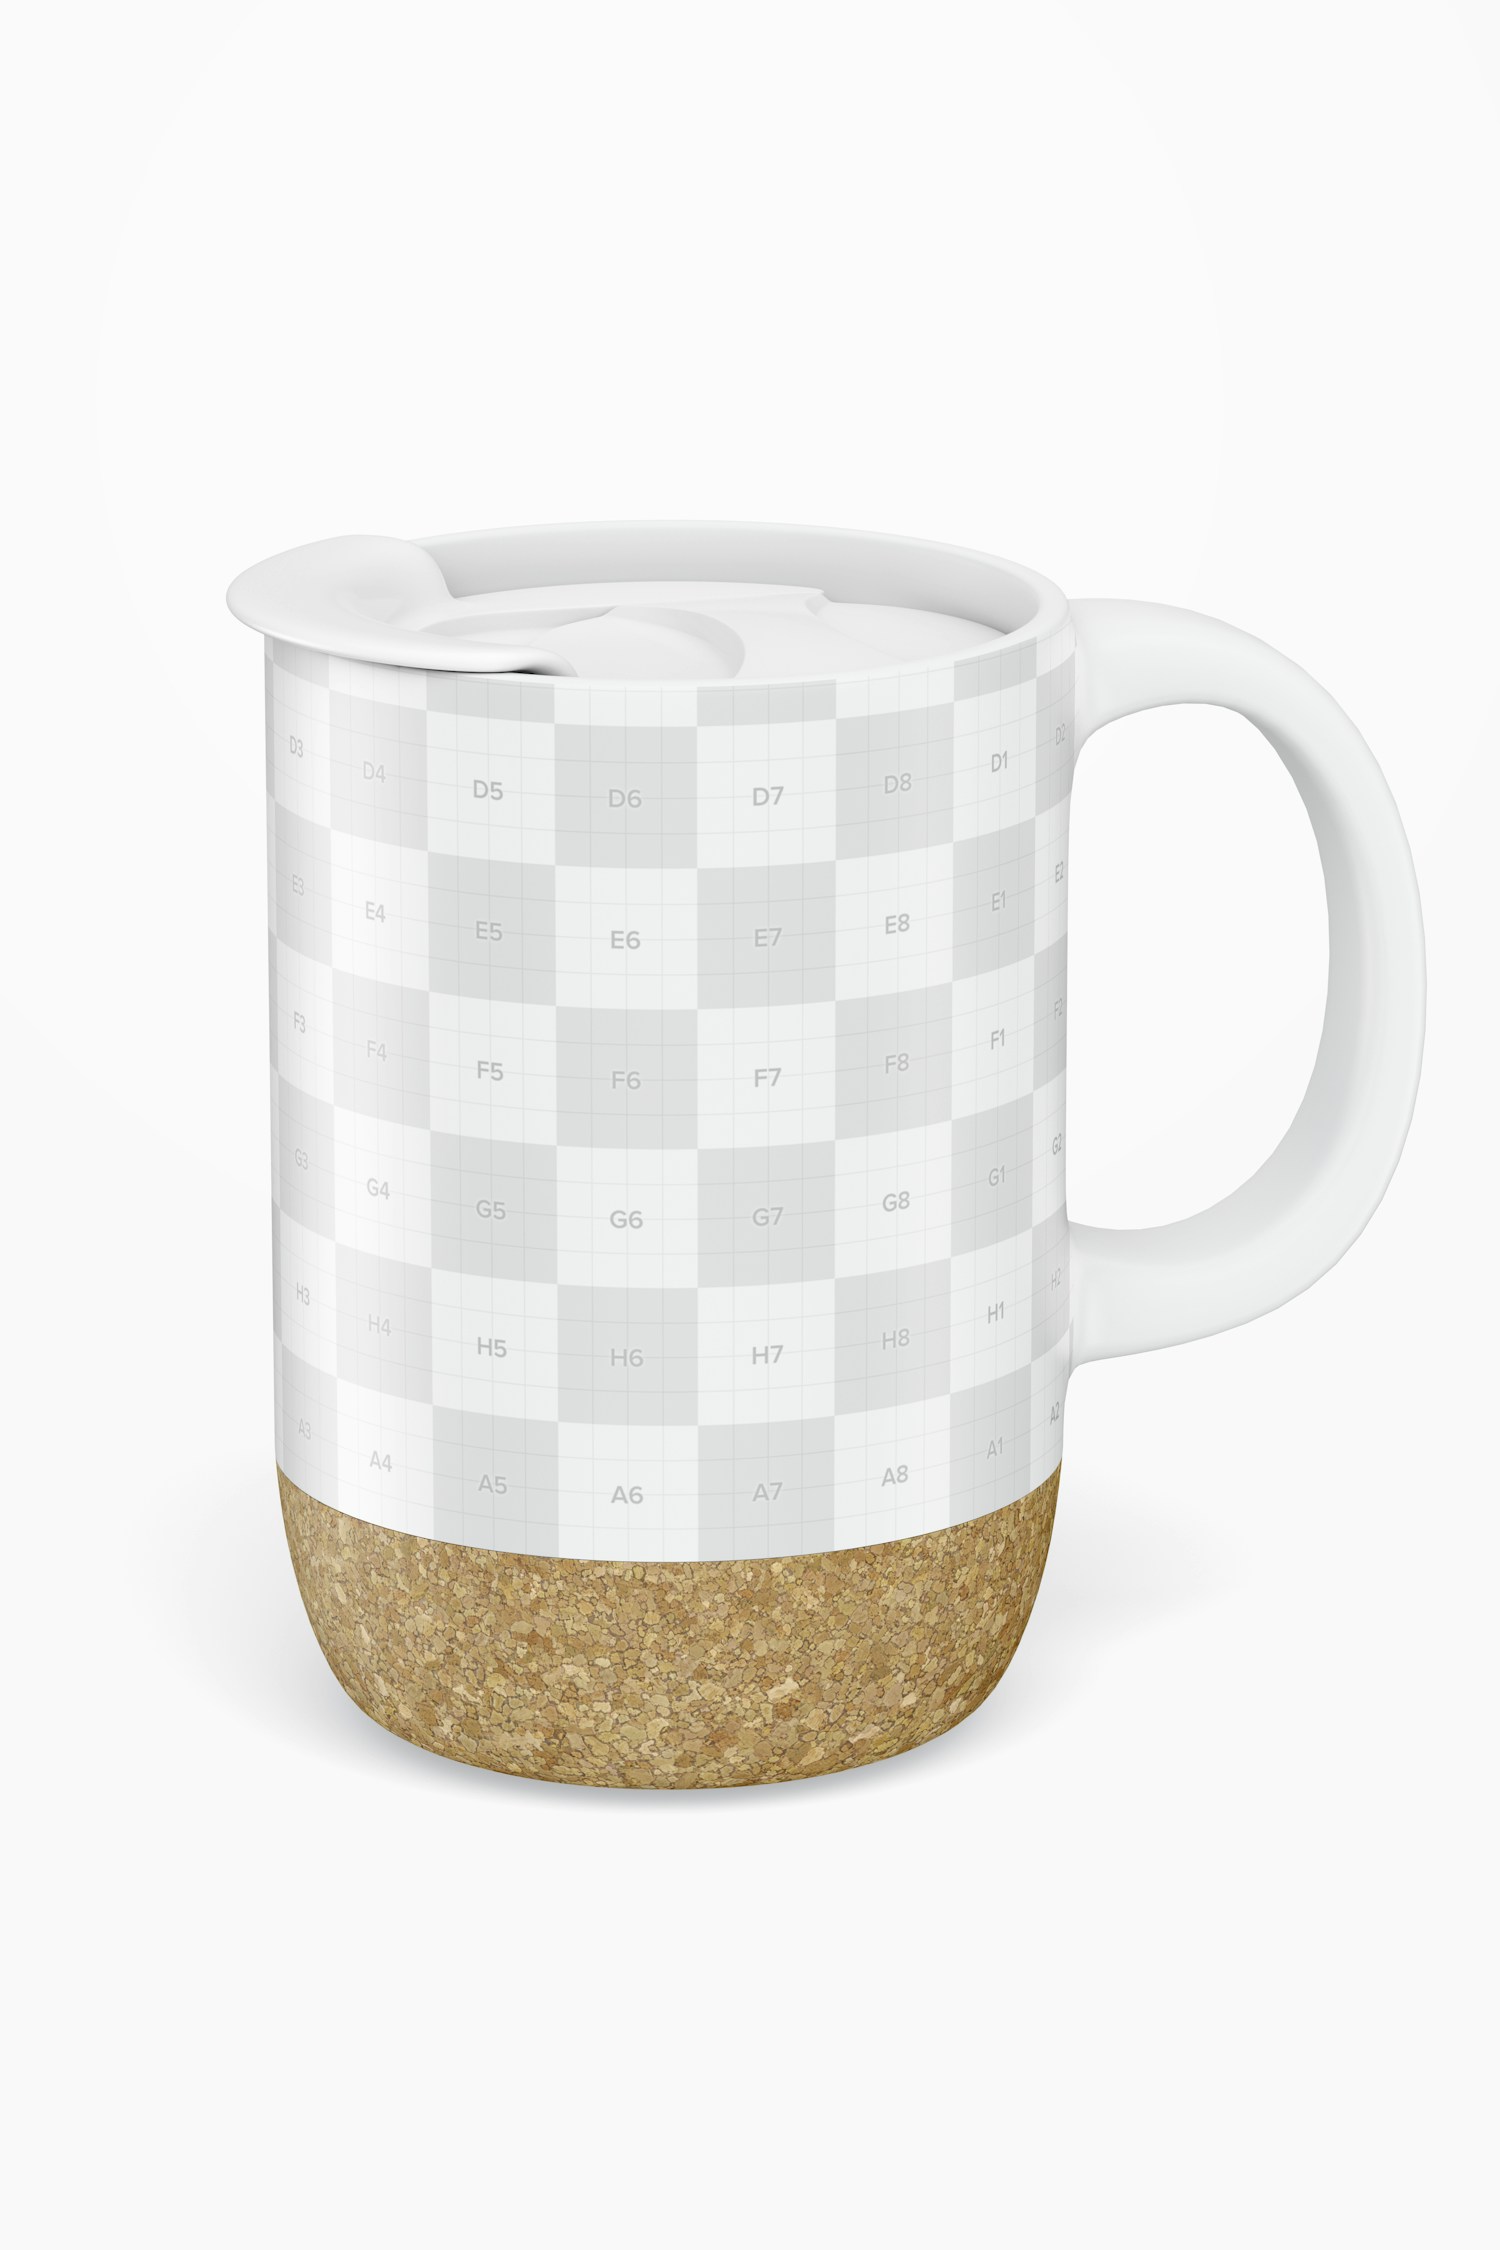 15 oz Ceramic Mug with Lid Mockup